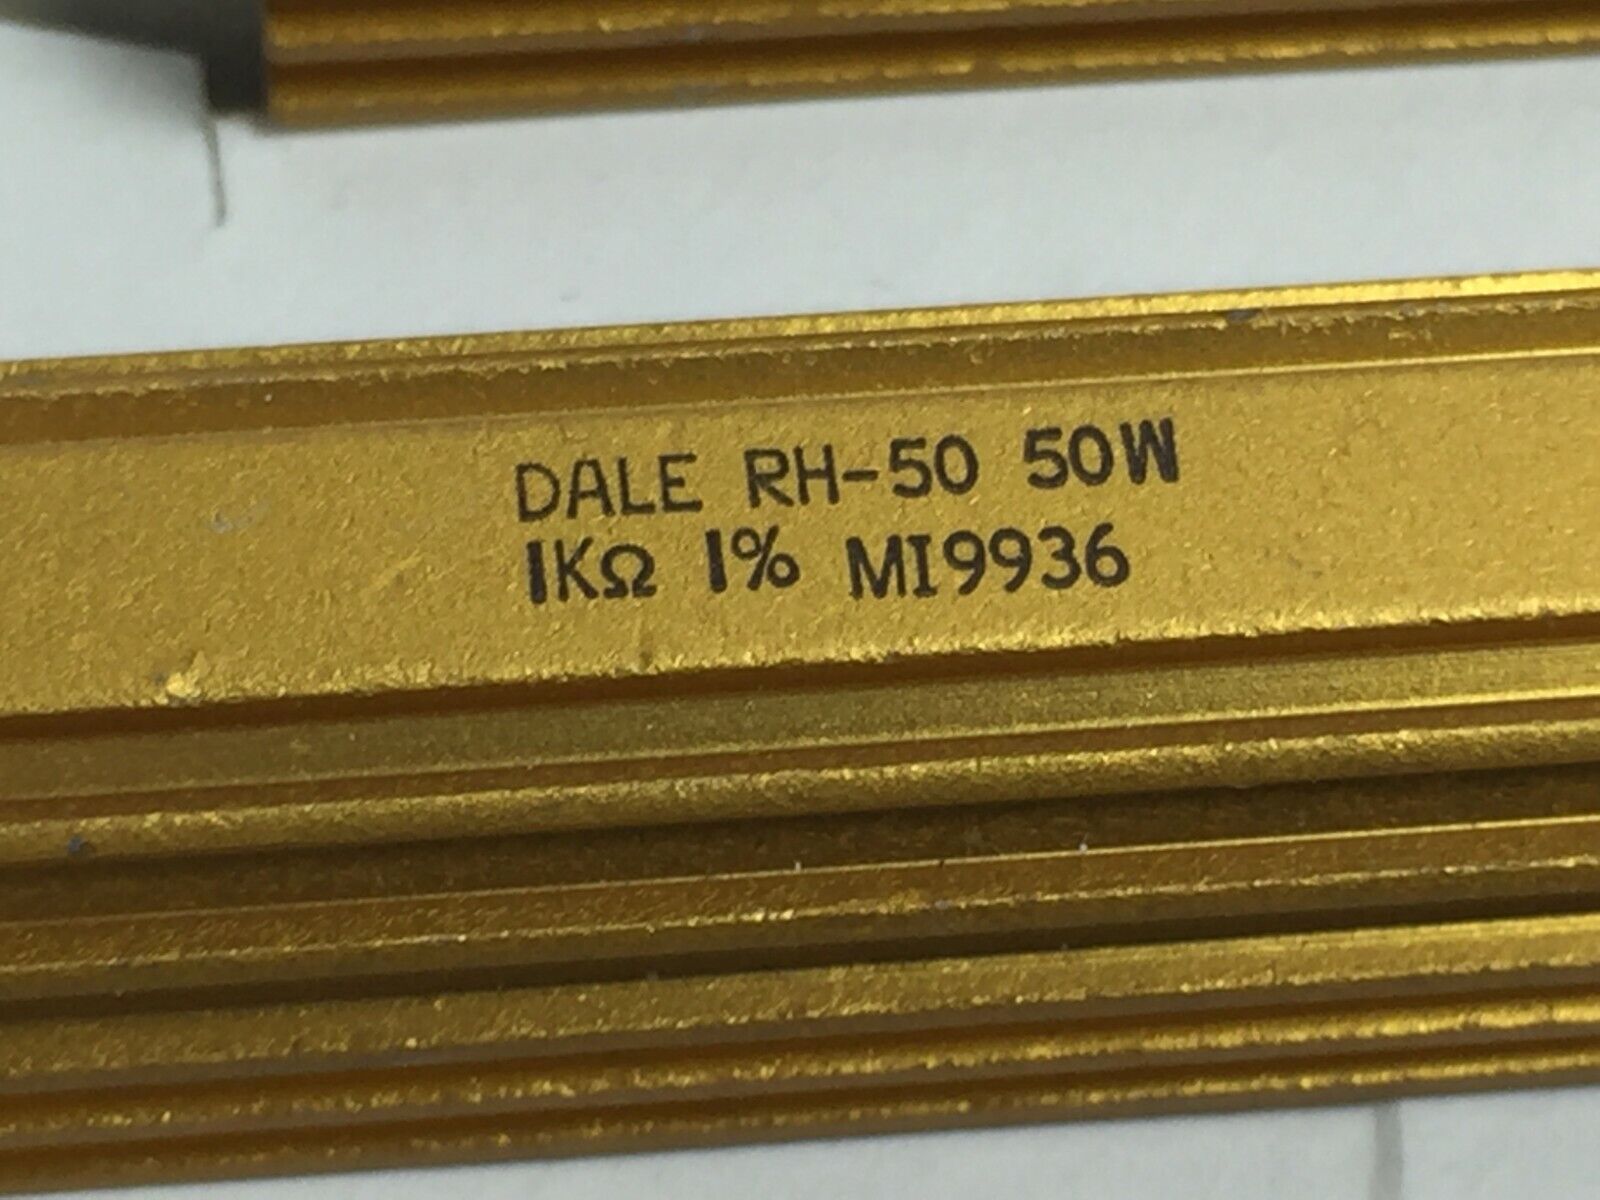 (4) Vishay Dale RH-50 50W  Resistors  Lot of 4